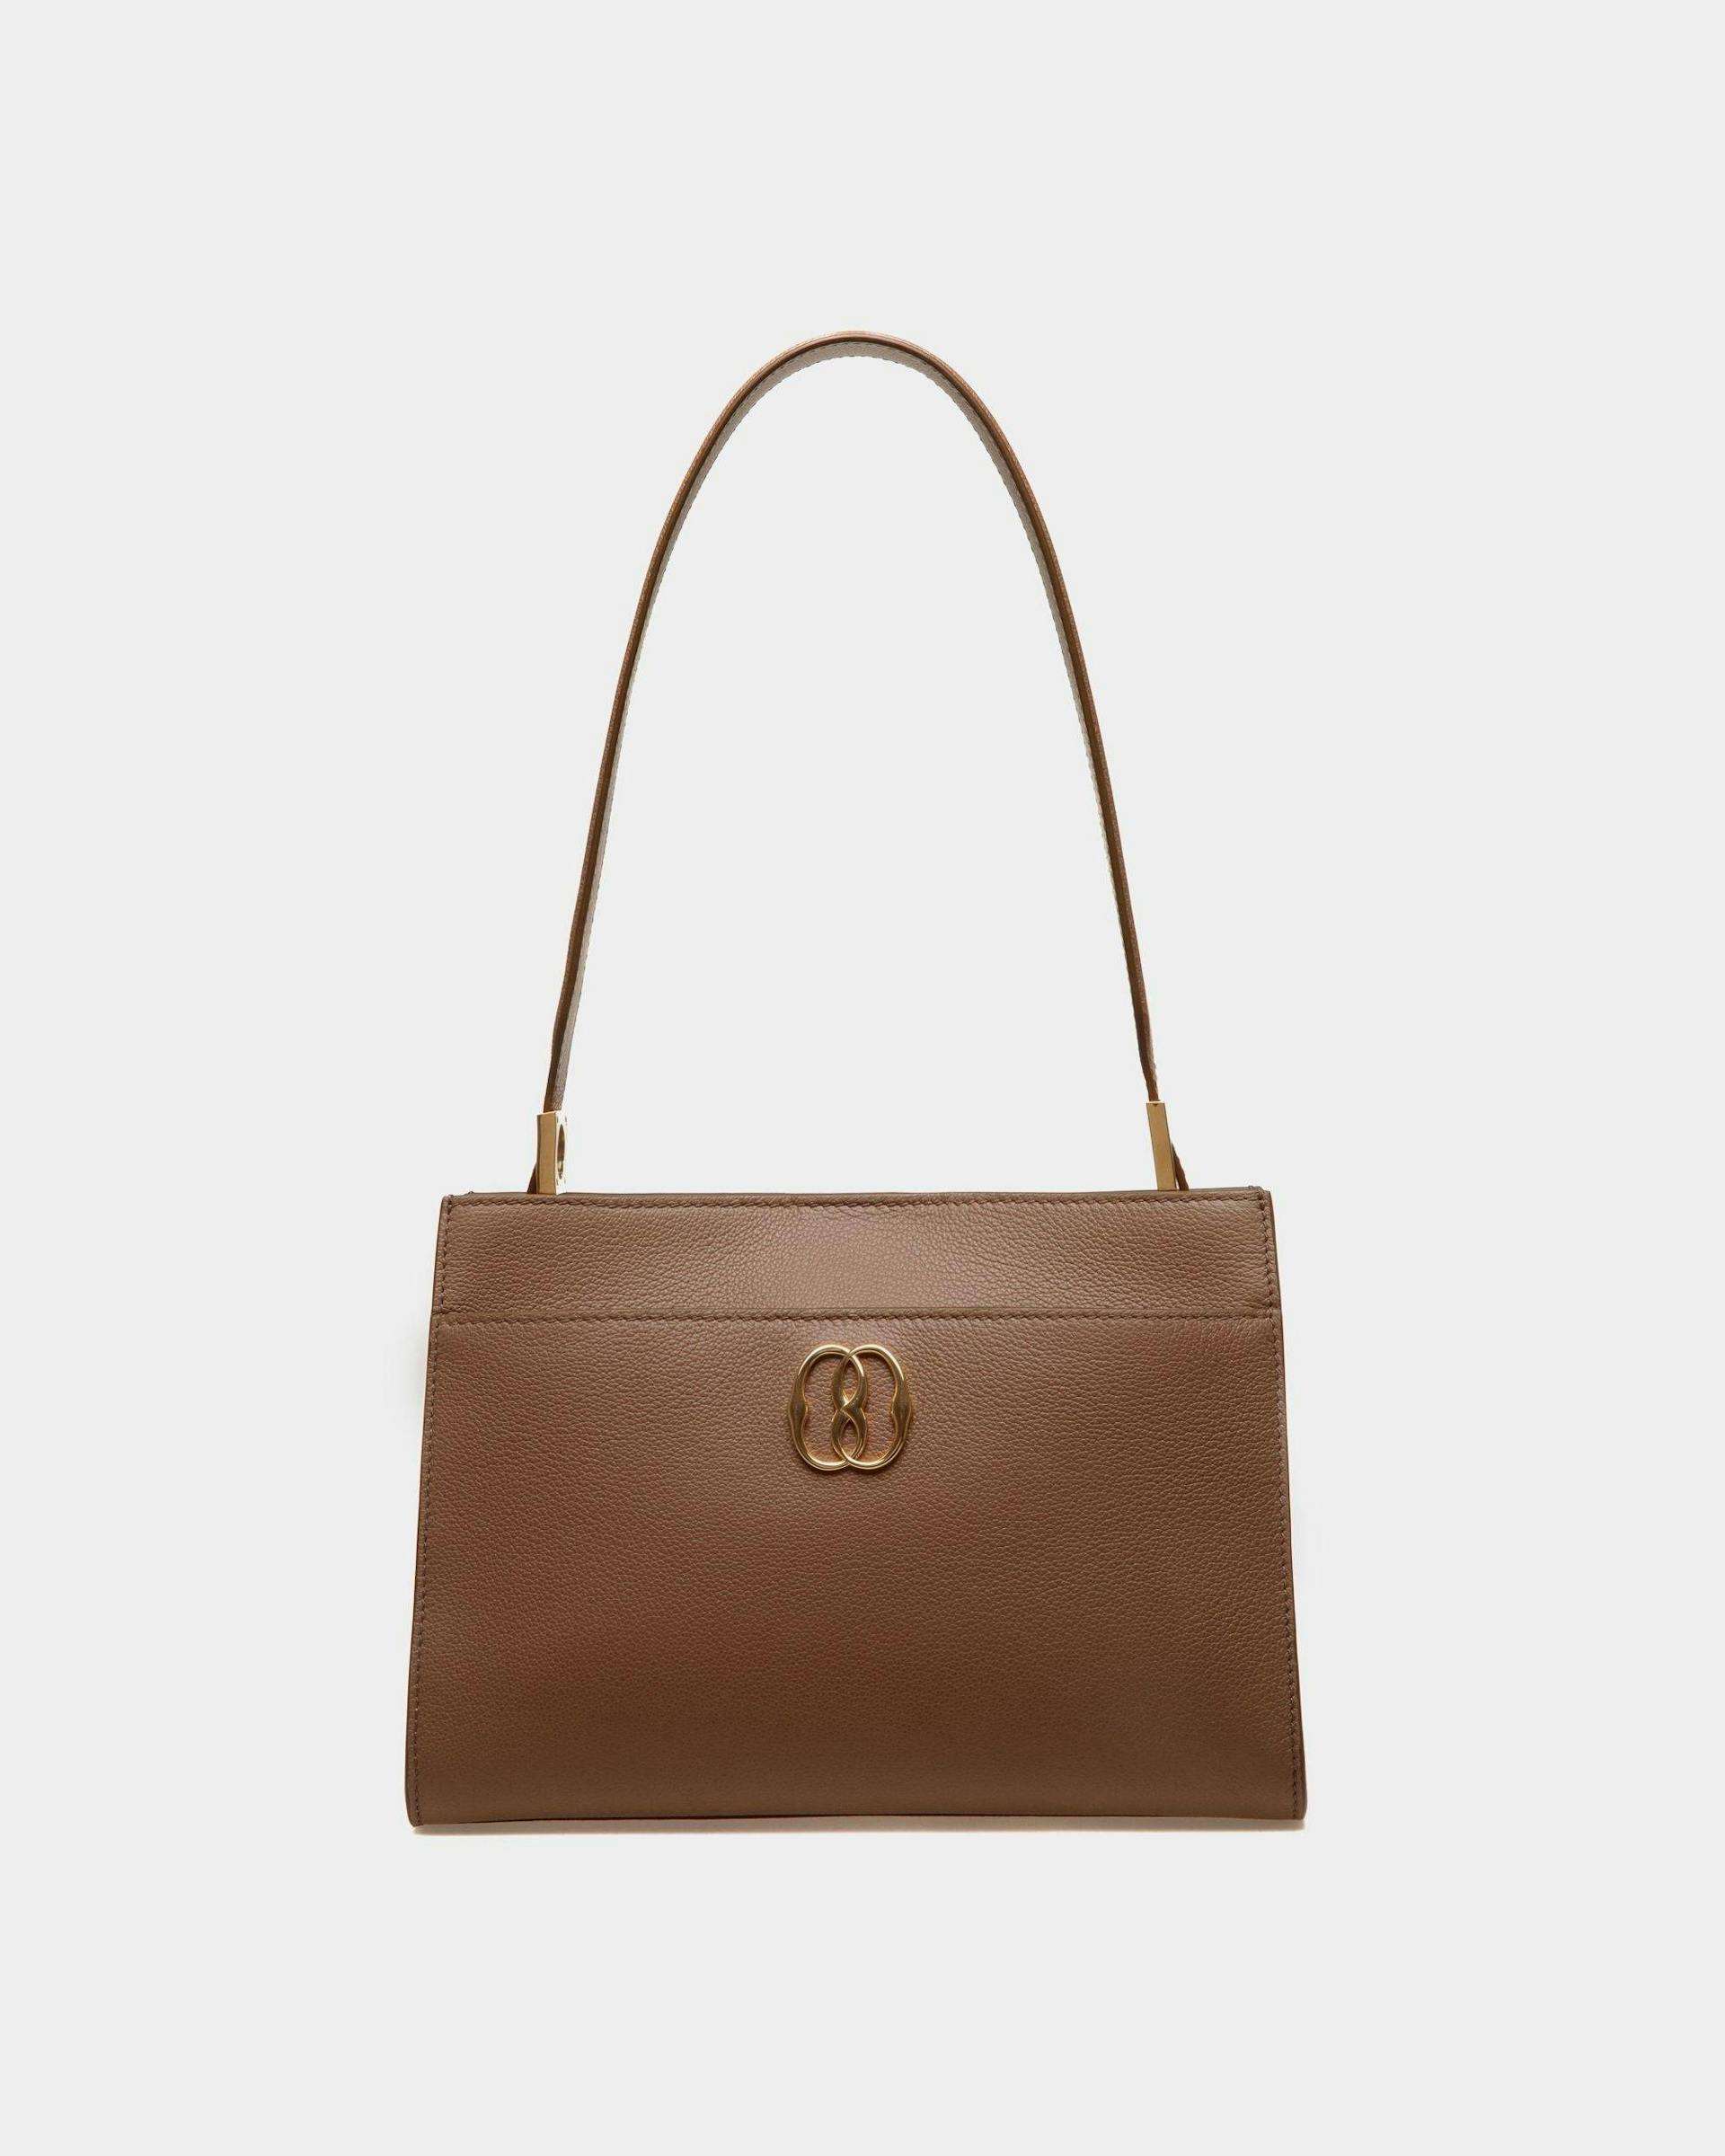 Women's Emblem Shoulder Bag in Brown Grained Leather | Bally | Still Life Front